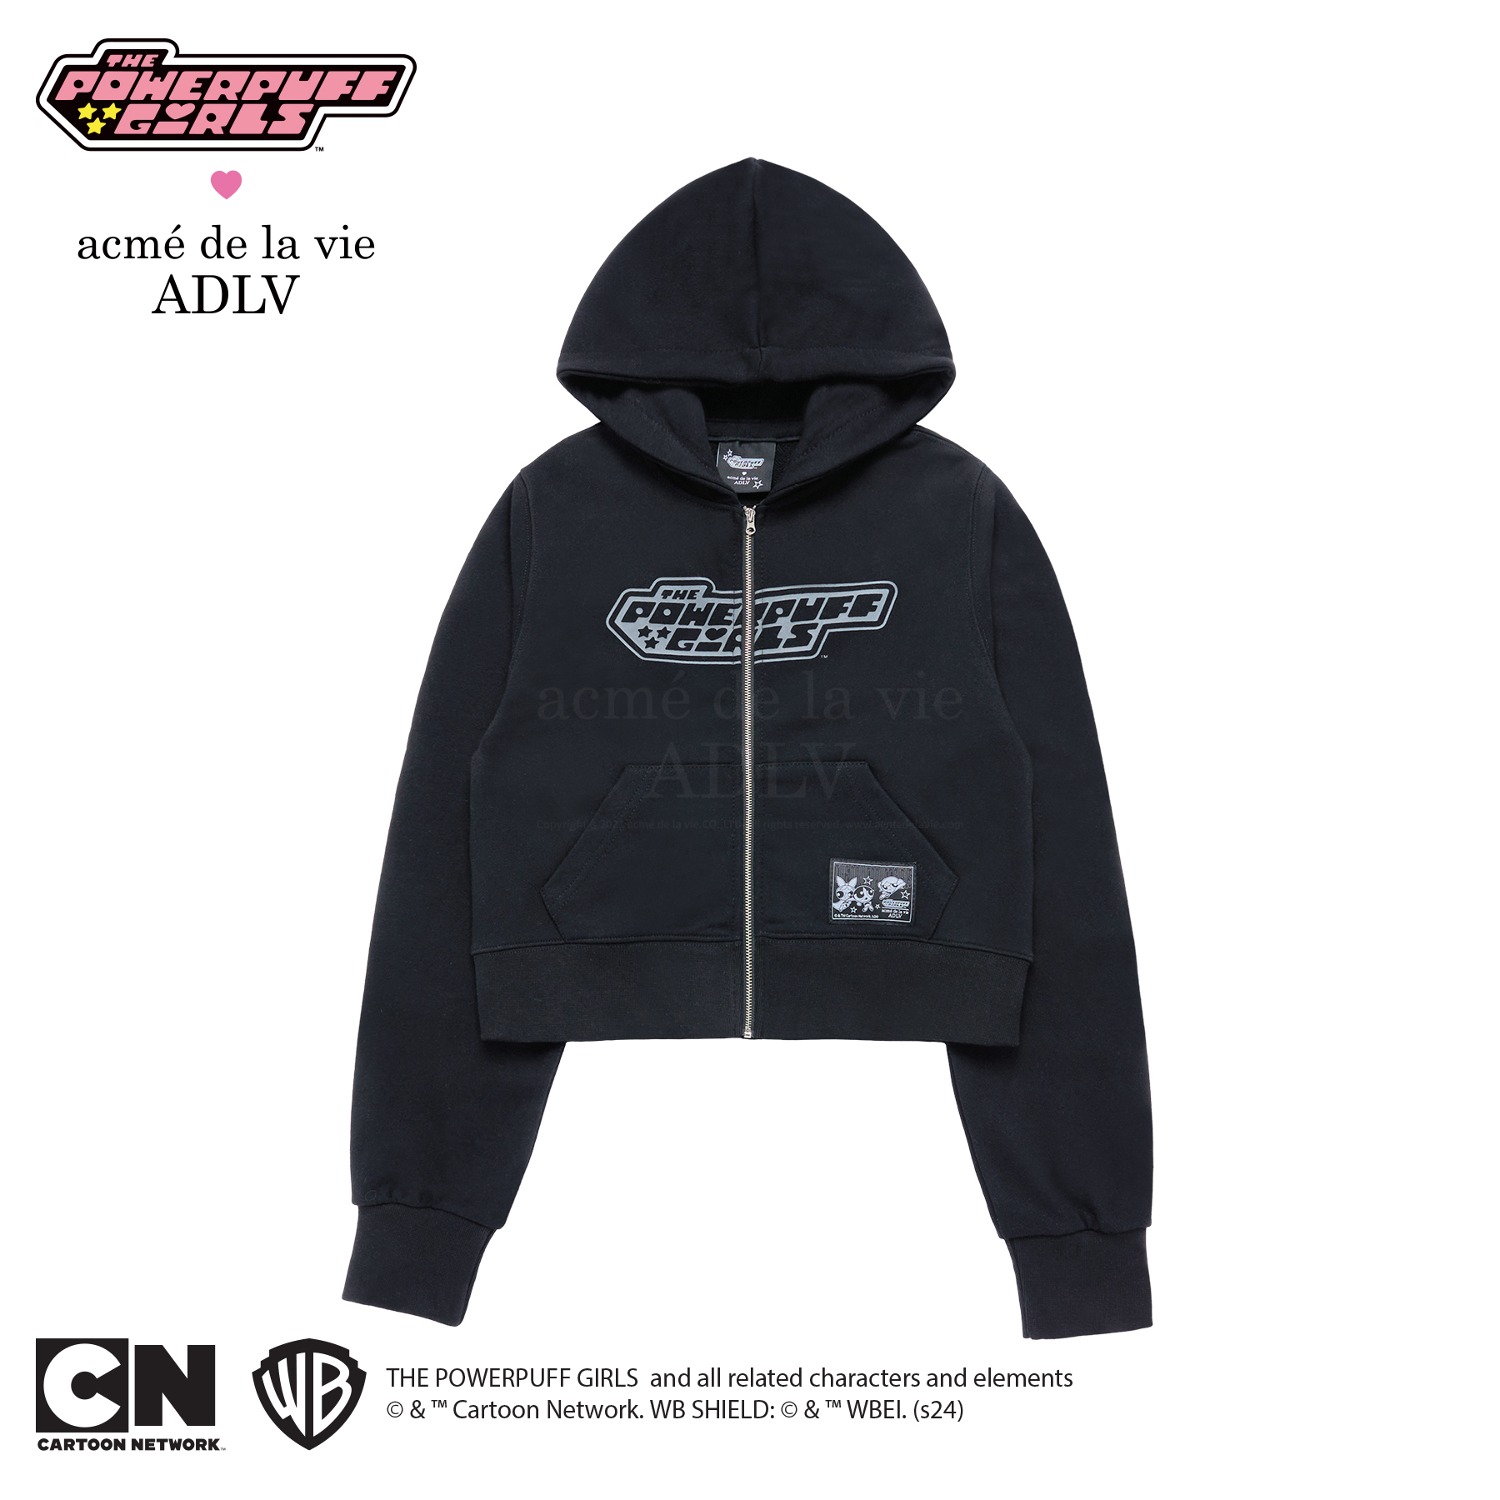 The Powerpuff Girls x acmedelavie Heart cut-out logo crop hoodie zip-up BLACK